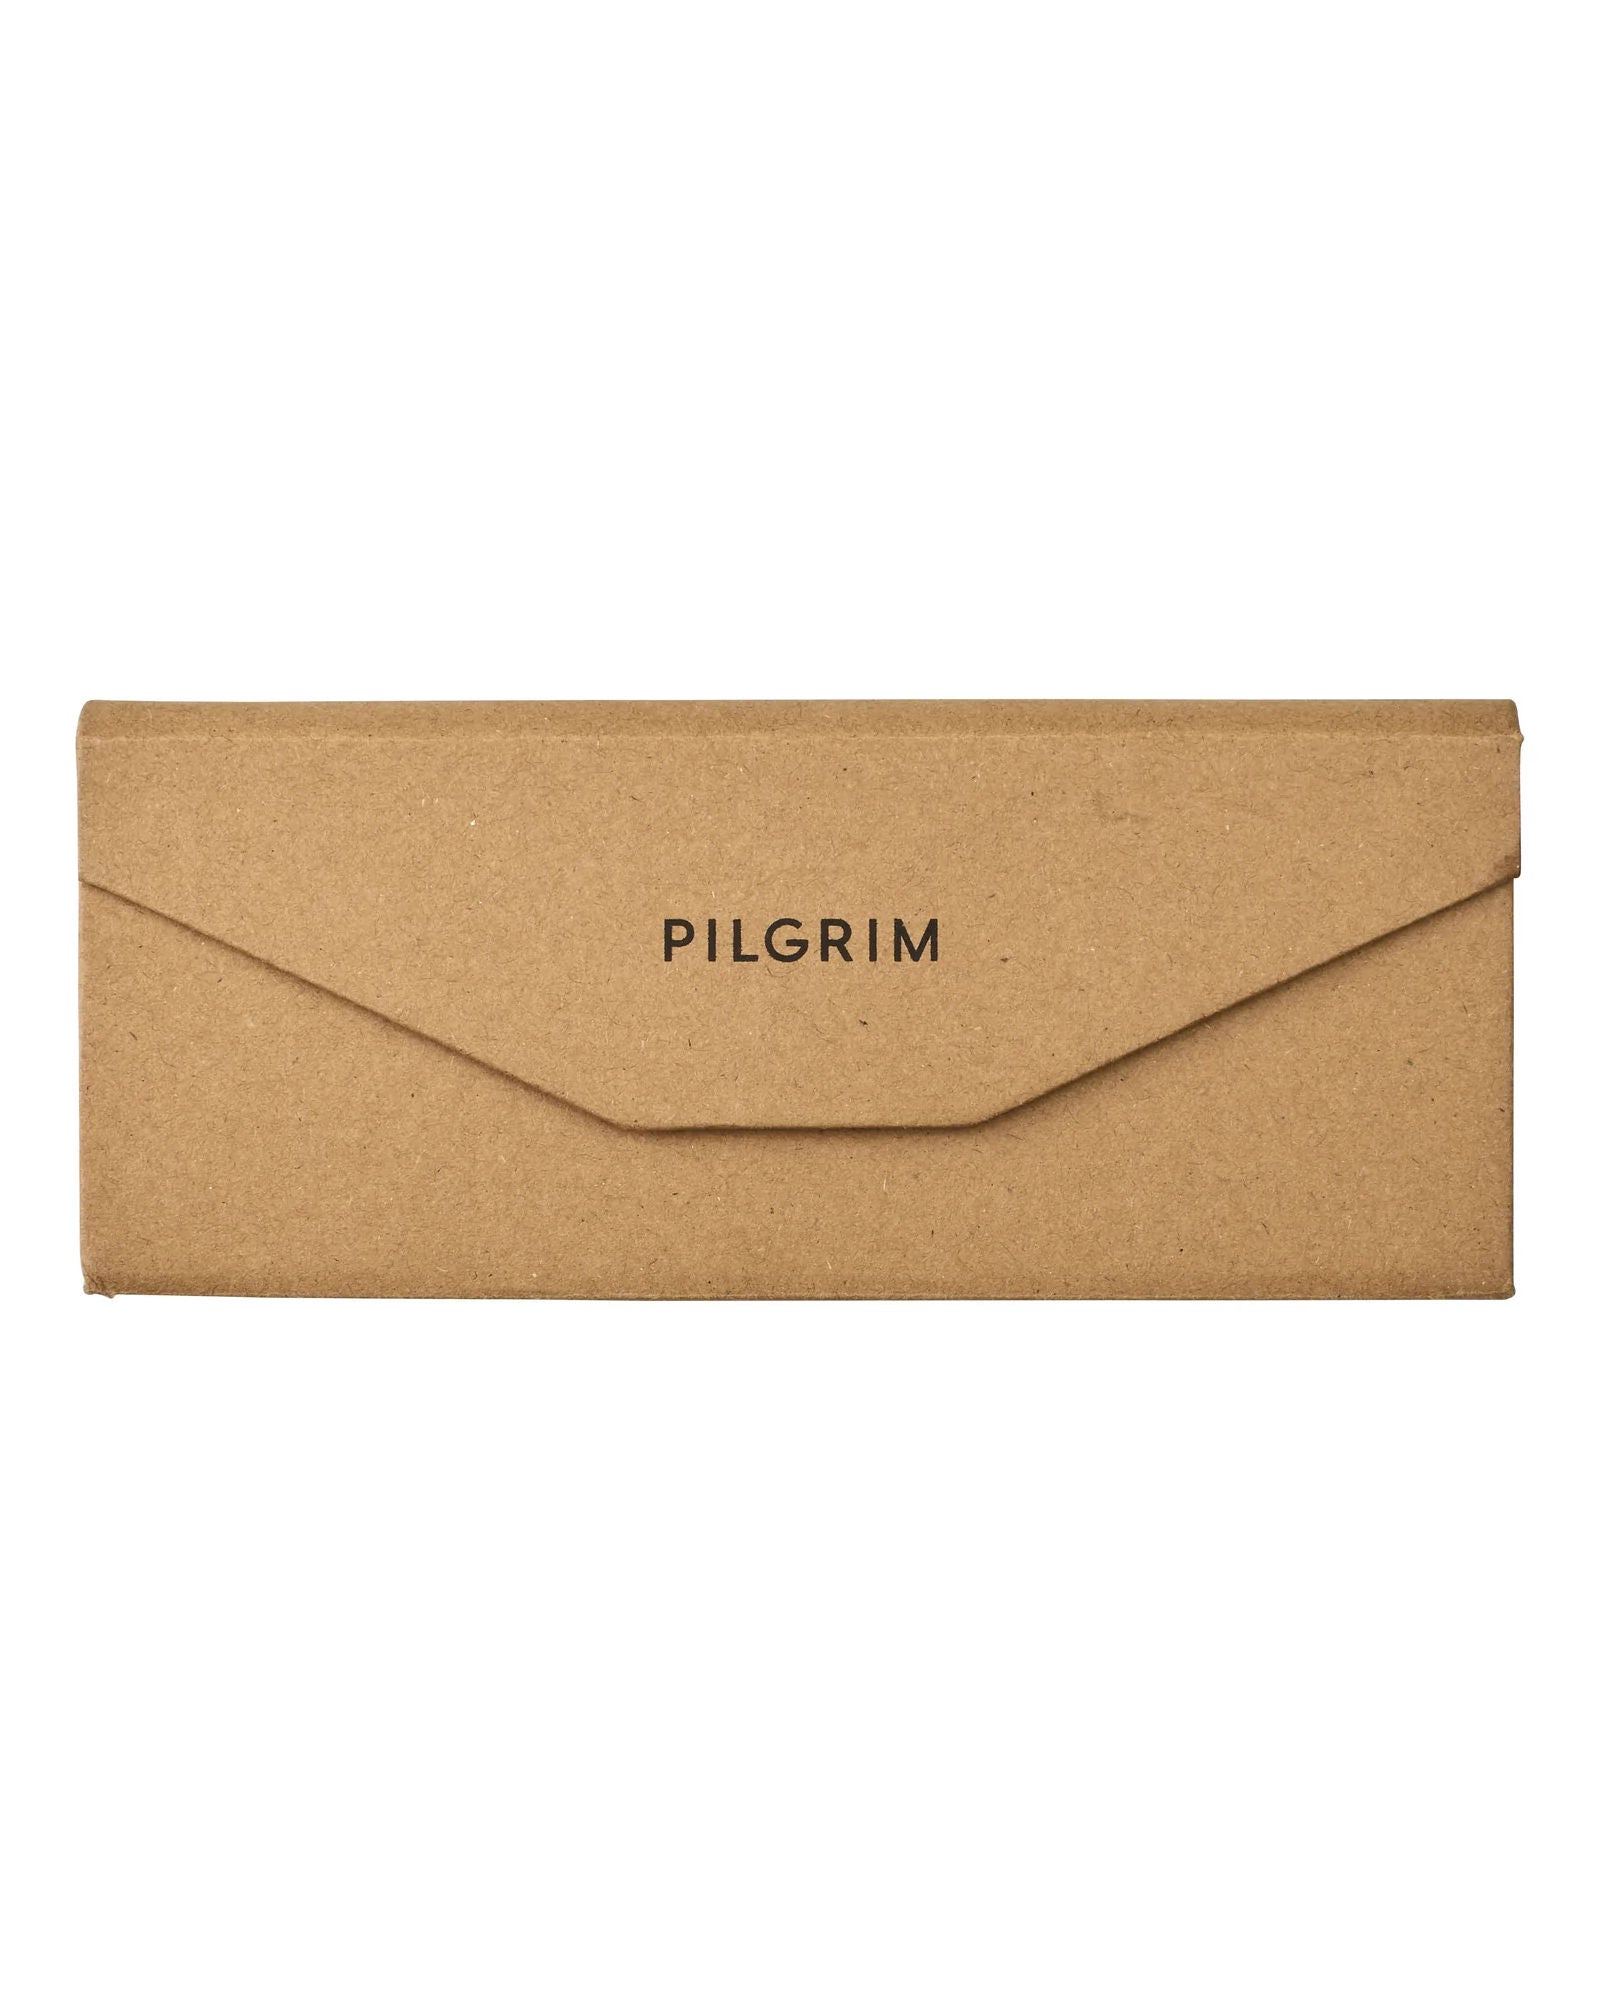 Case for Sunglasses - Pilgrim Logo